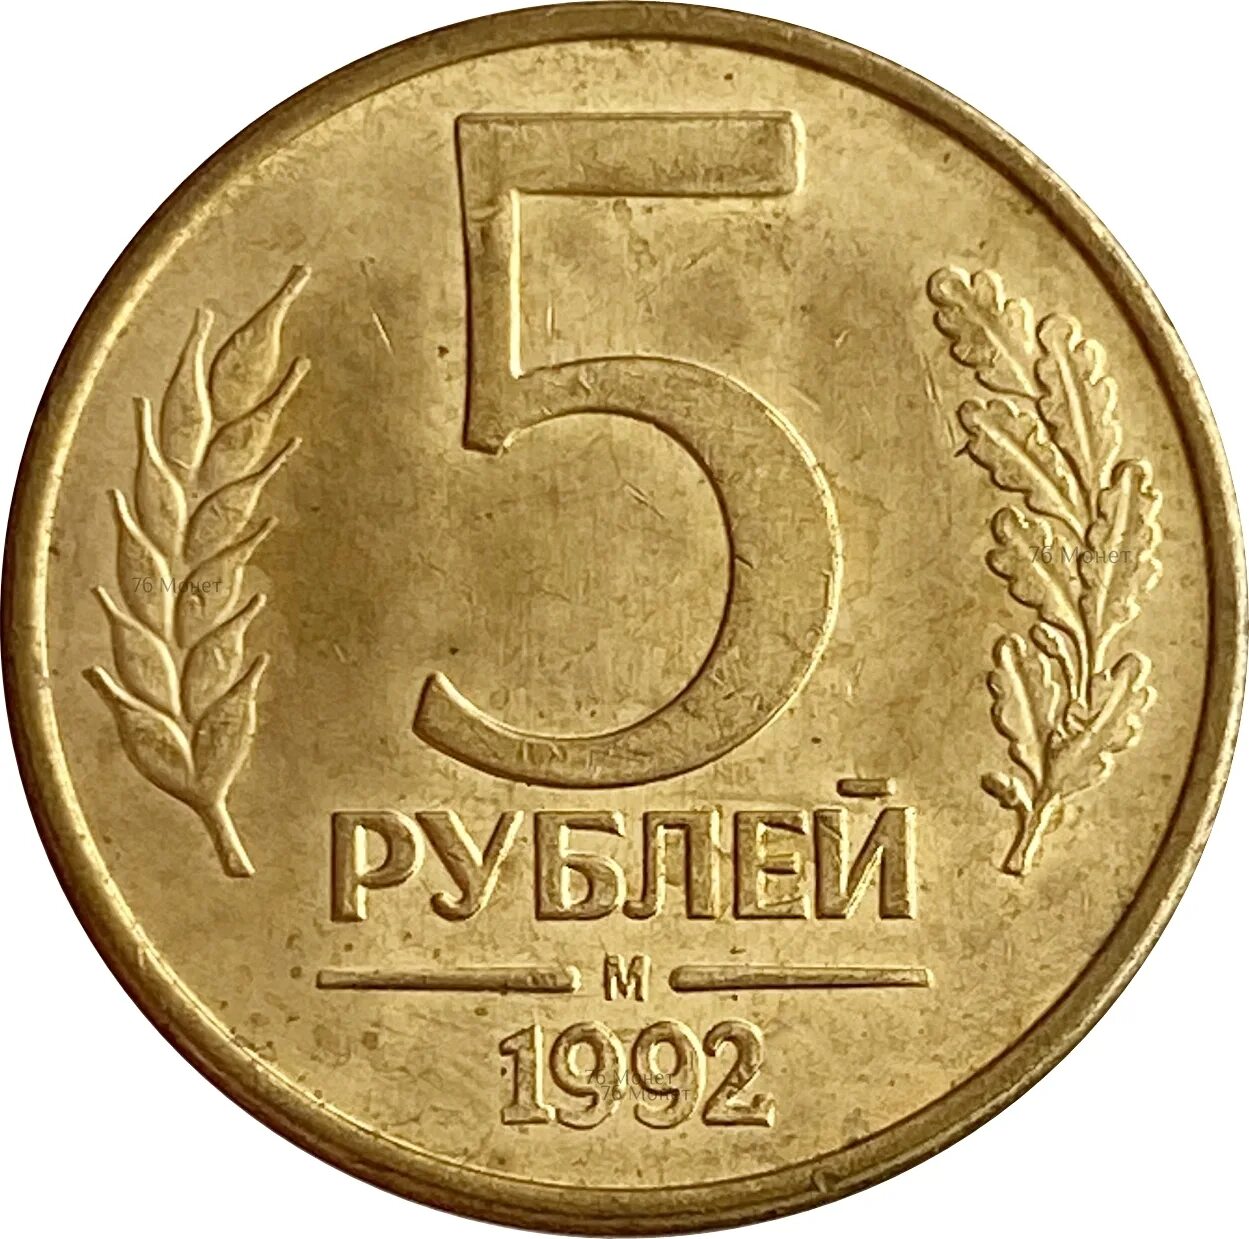 22 5 в рублях. Монета 5 рублей 1991 ЛМД. Монета 5 рублей 1992 ММД. Монета 5 рублей 1992. Монетка 5 рублей.